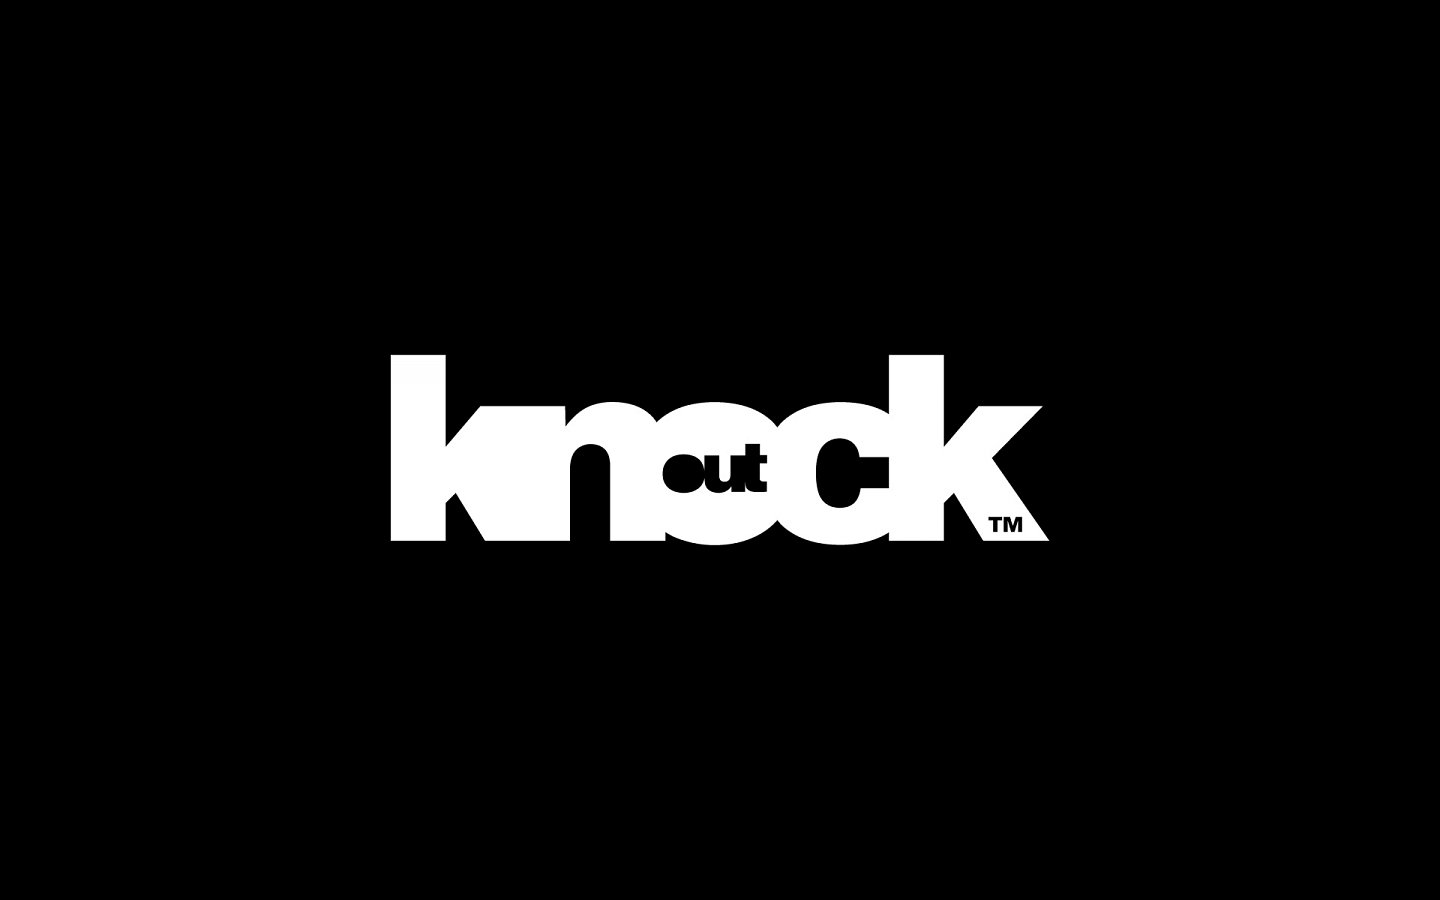 Knock Out Logo Design in Mono White Reversed